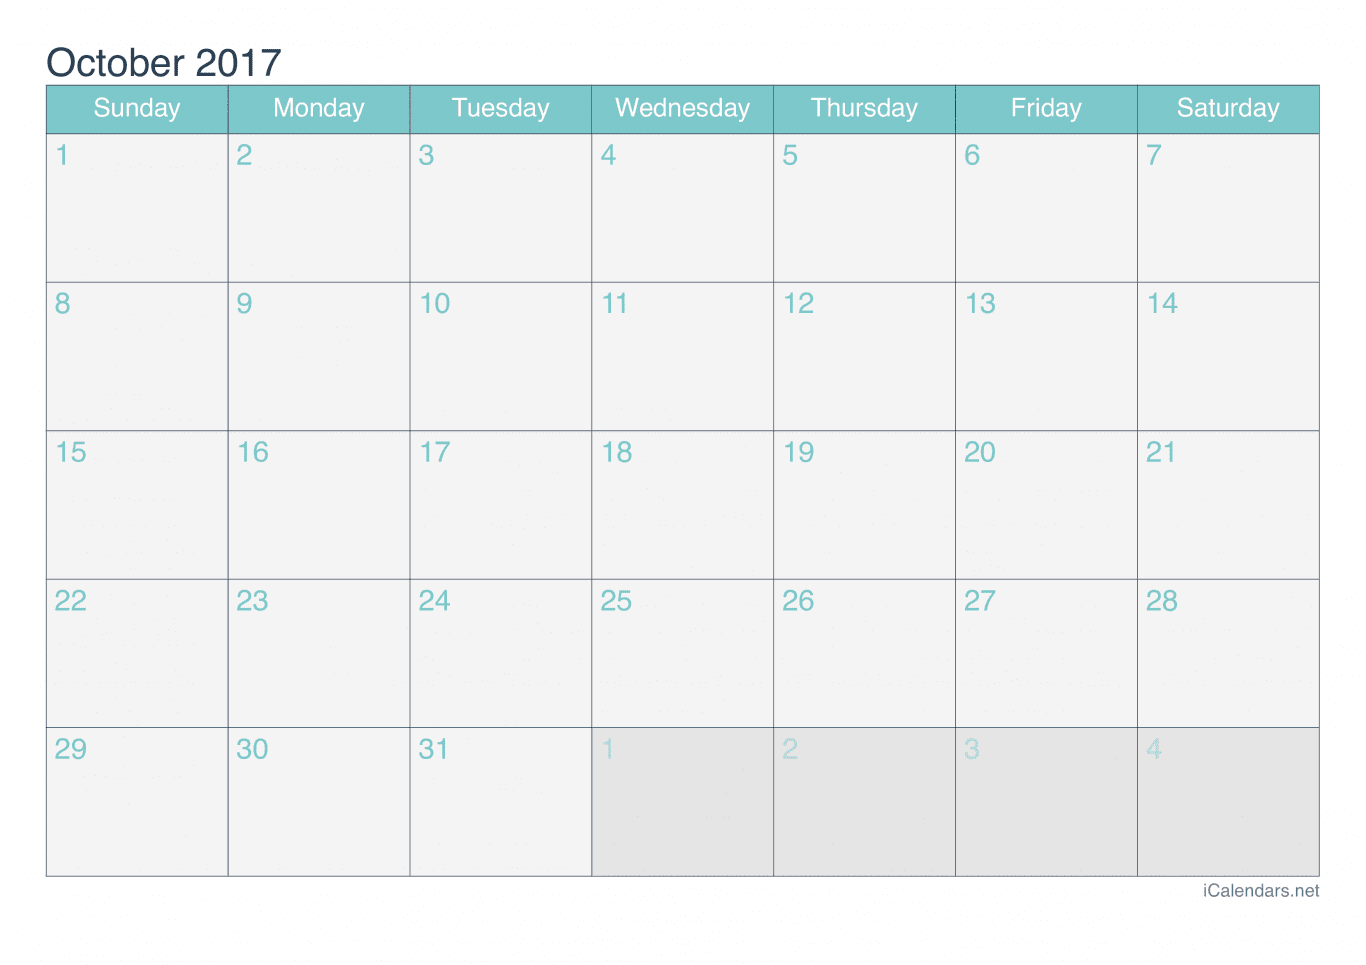 2017 October Calendar - Turquoise